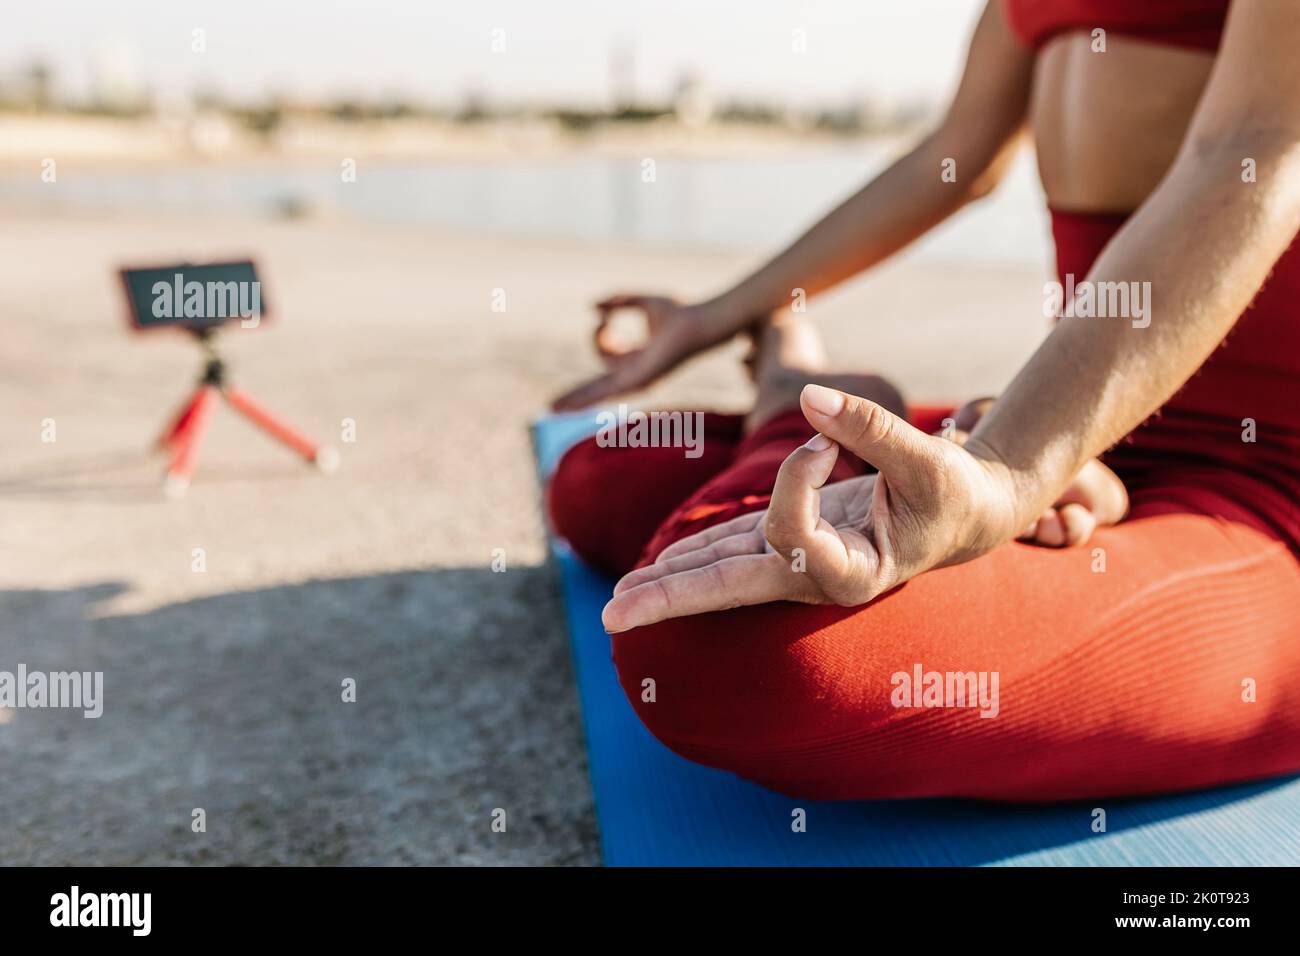 Erwachsene Frau, die Video-Tutorial des Yoga-Kurses auf dem Mobiltelefon aufzeichnet - Yoga Virtual Fitness class concept Stockfoto